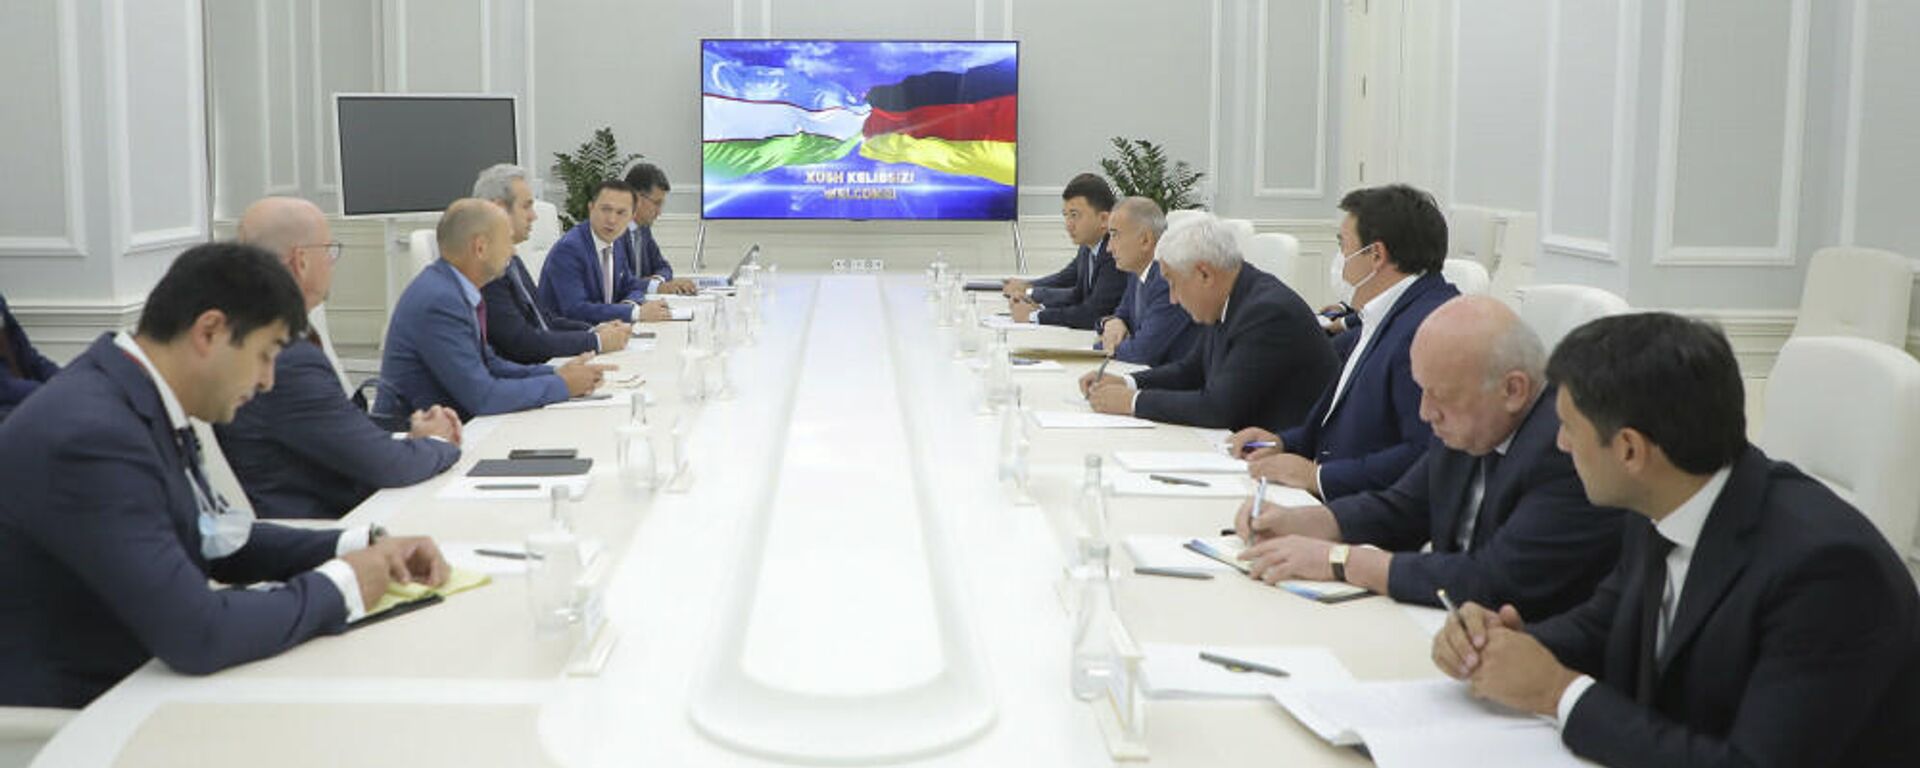 Встреча хокима Ташкента с представителями немецкой компании Siemens - Sputnik Узбекистан, 1920, 02.10.2021